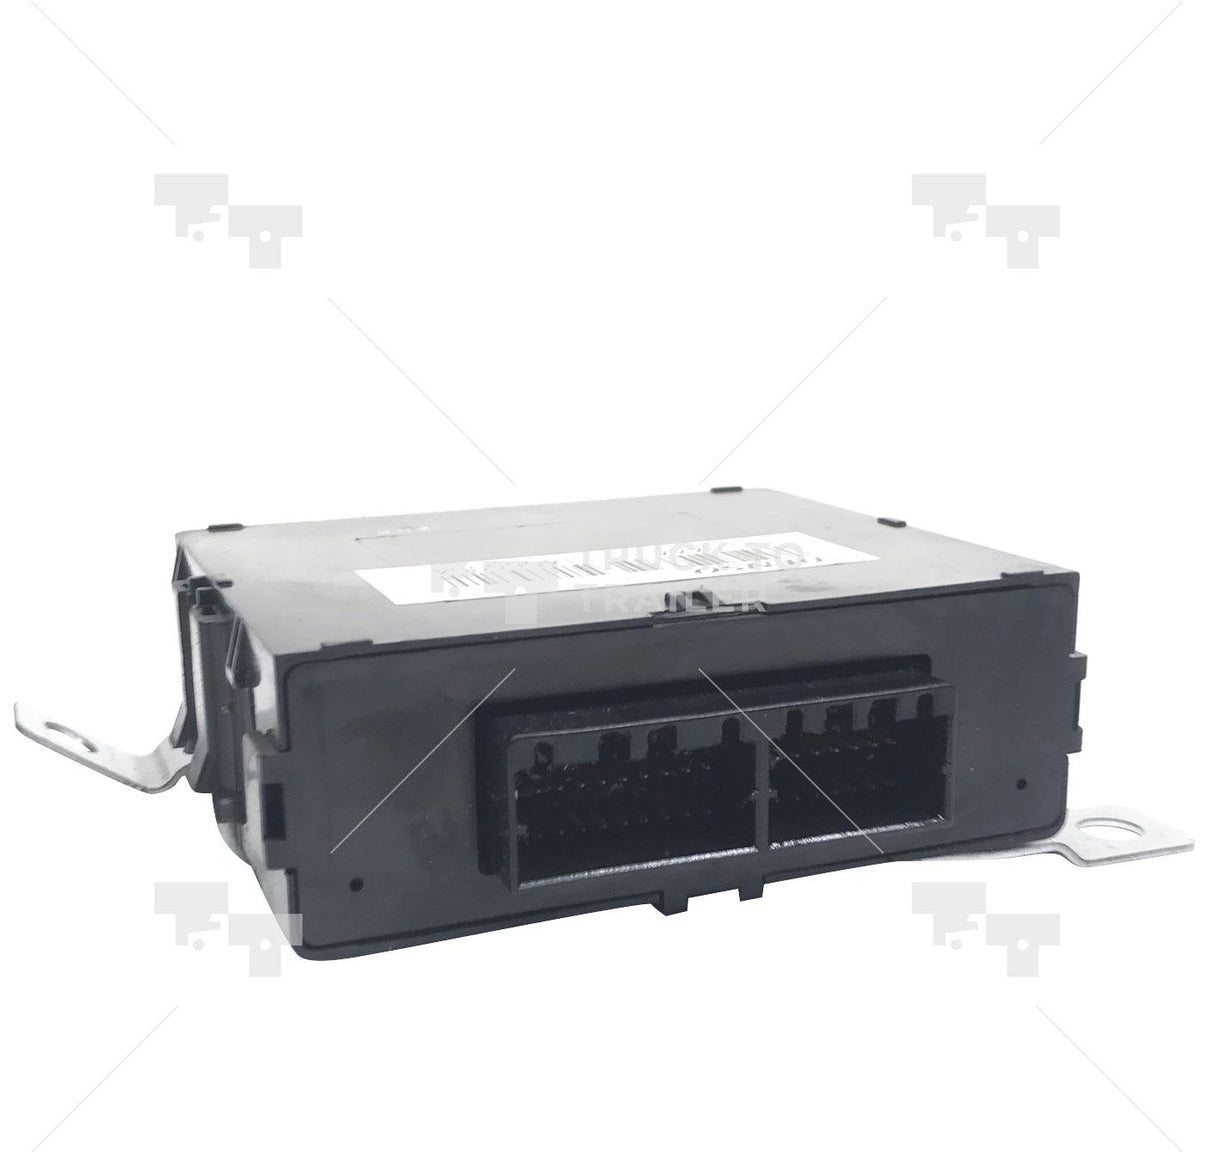 98146600 Genuine Denso 4X4 4Wd Tccm Transfer Case Control Module - Truck To Trailer